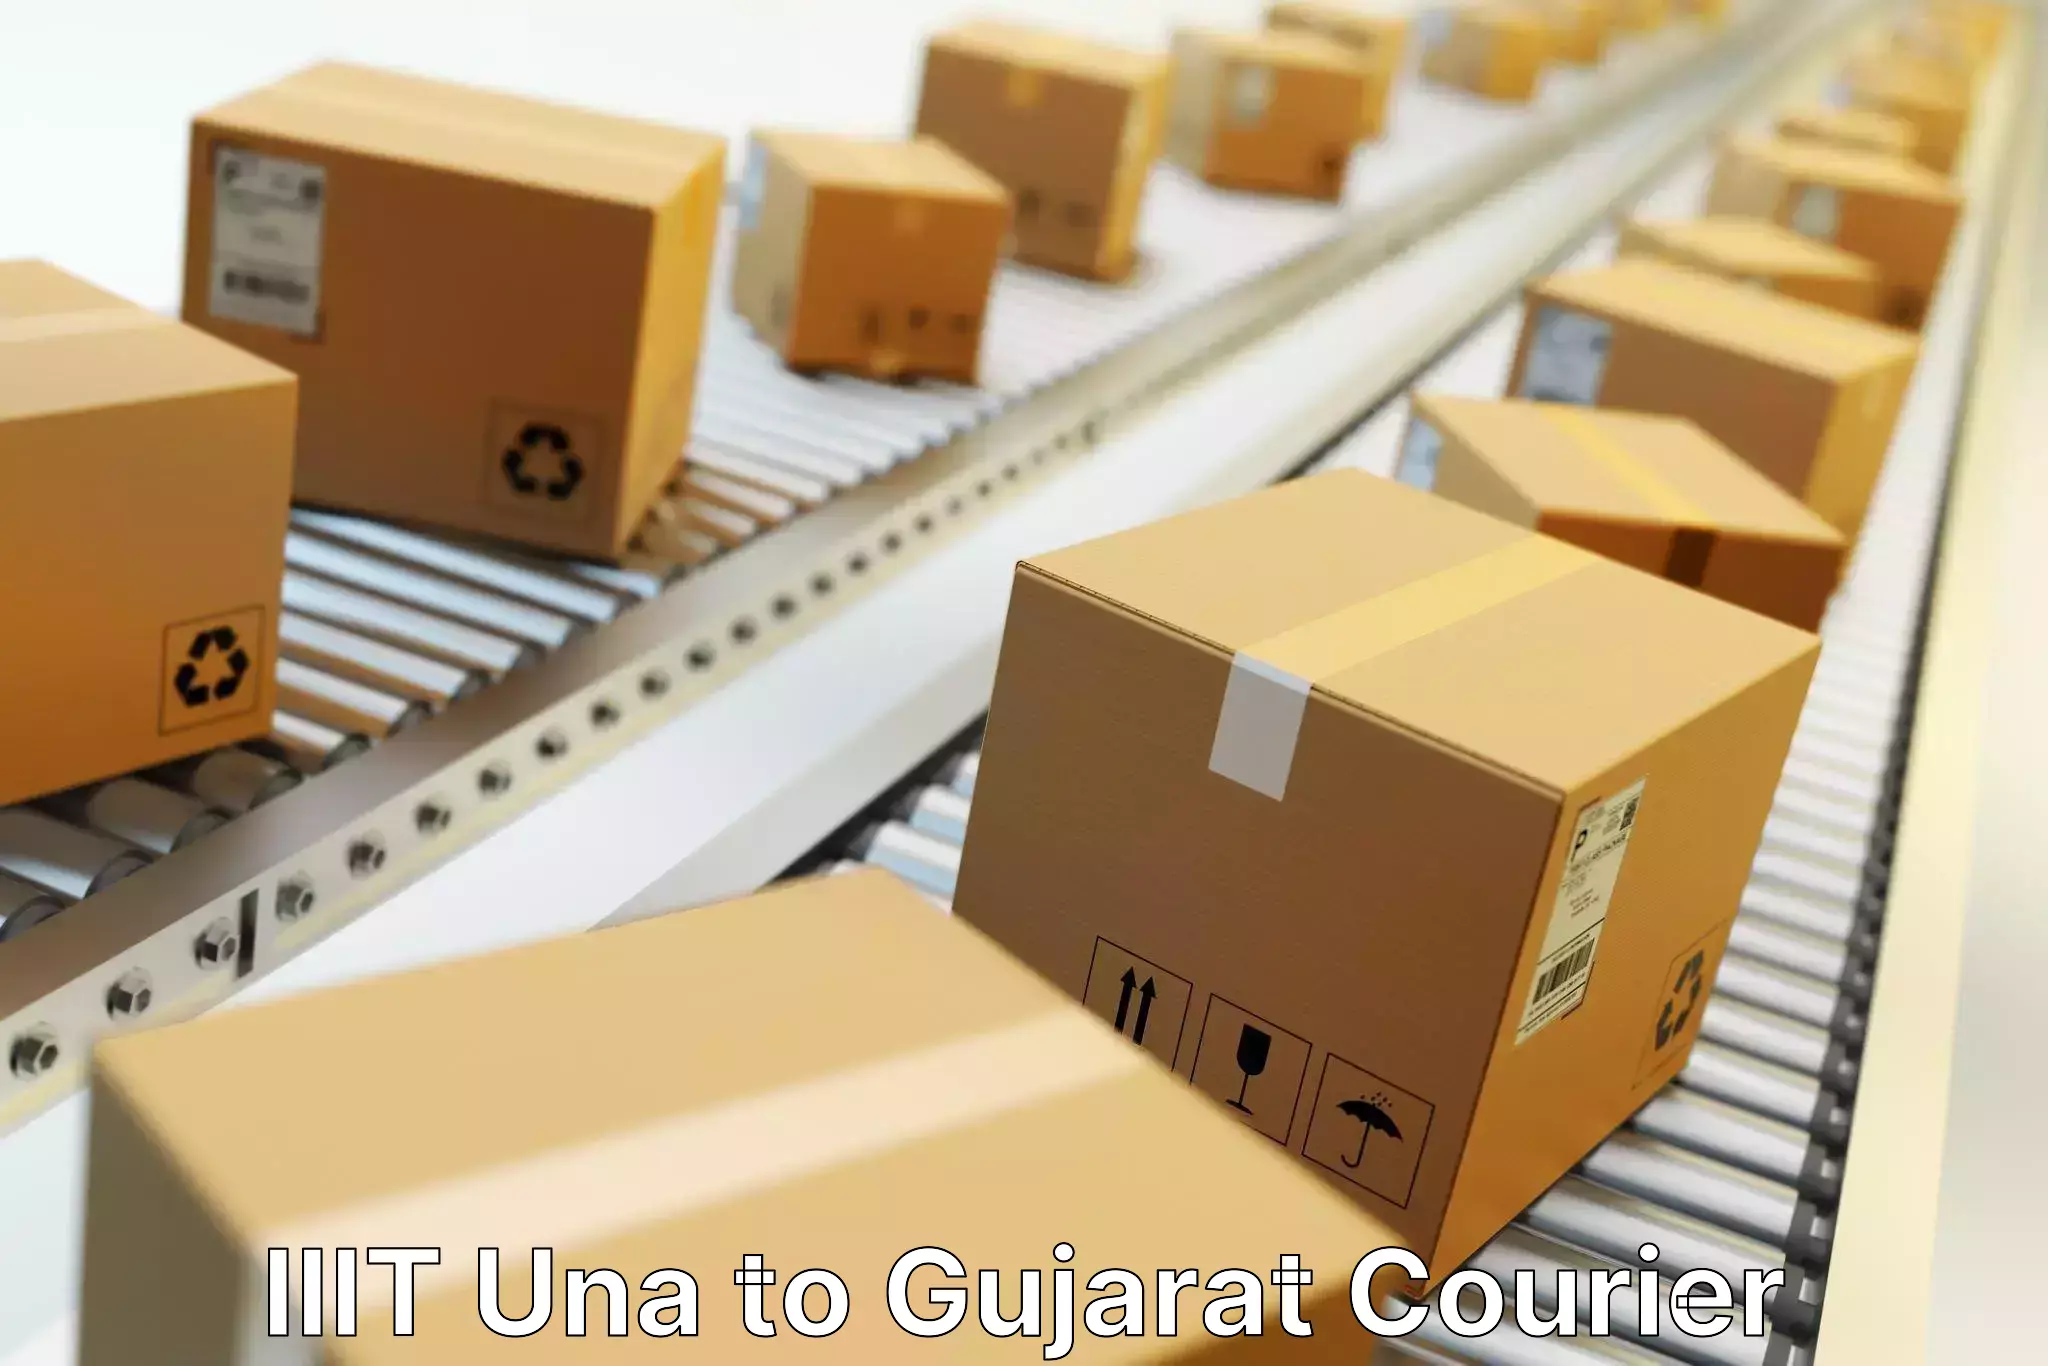 Modern courier technology in IIIT Una to Gujarat